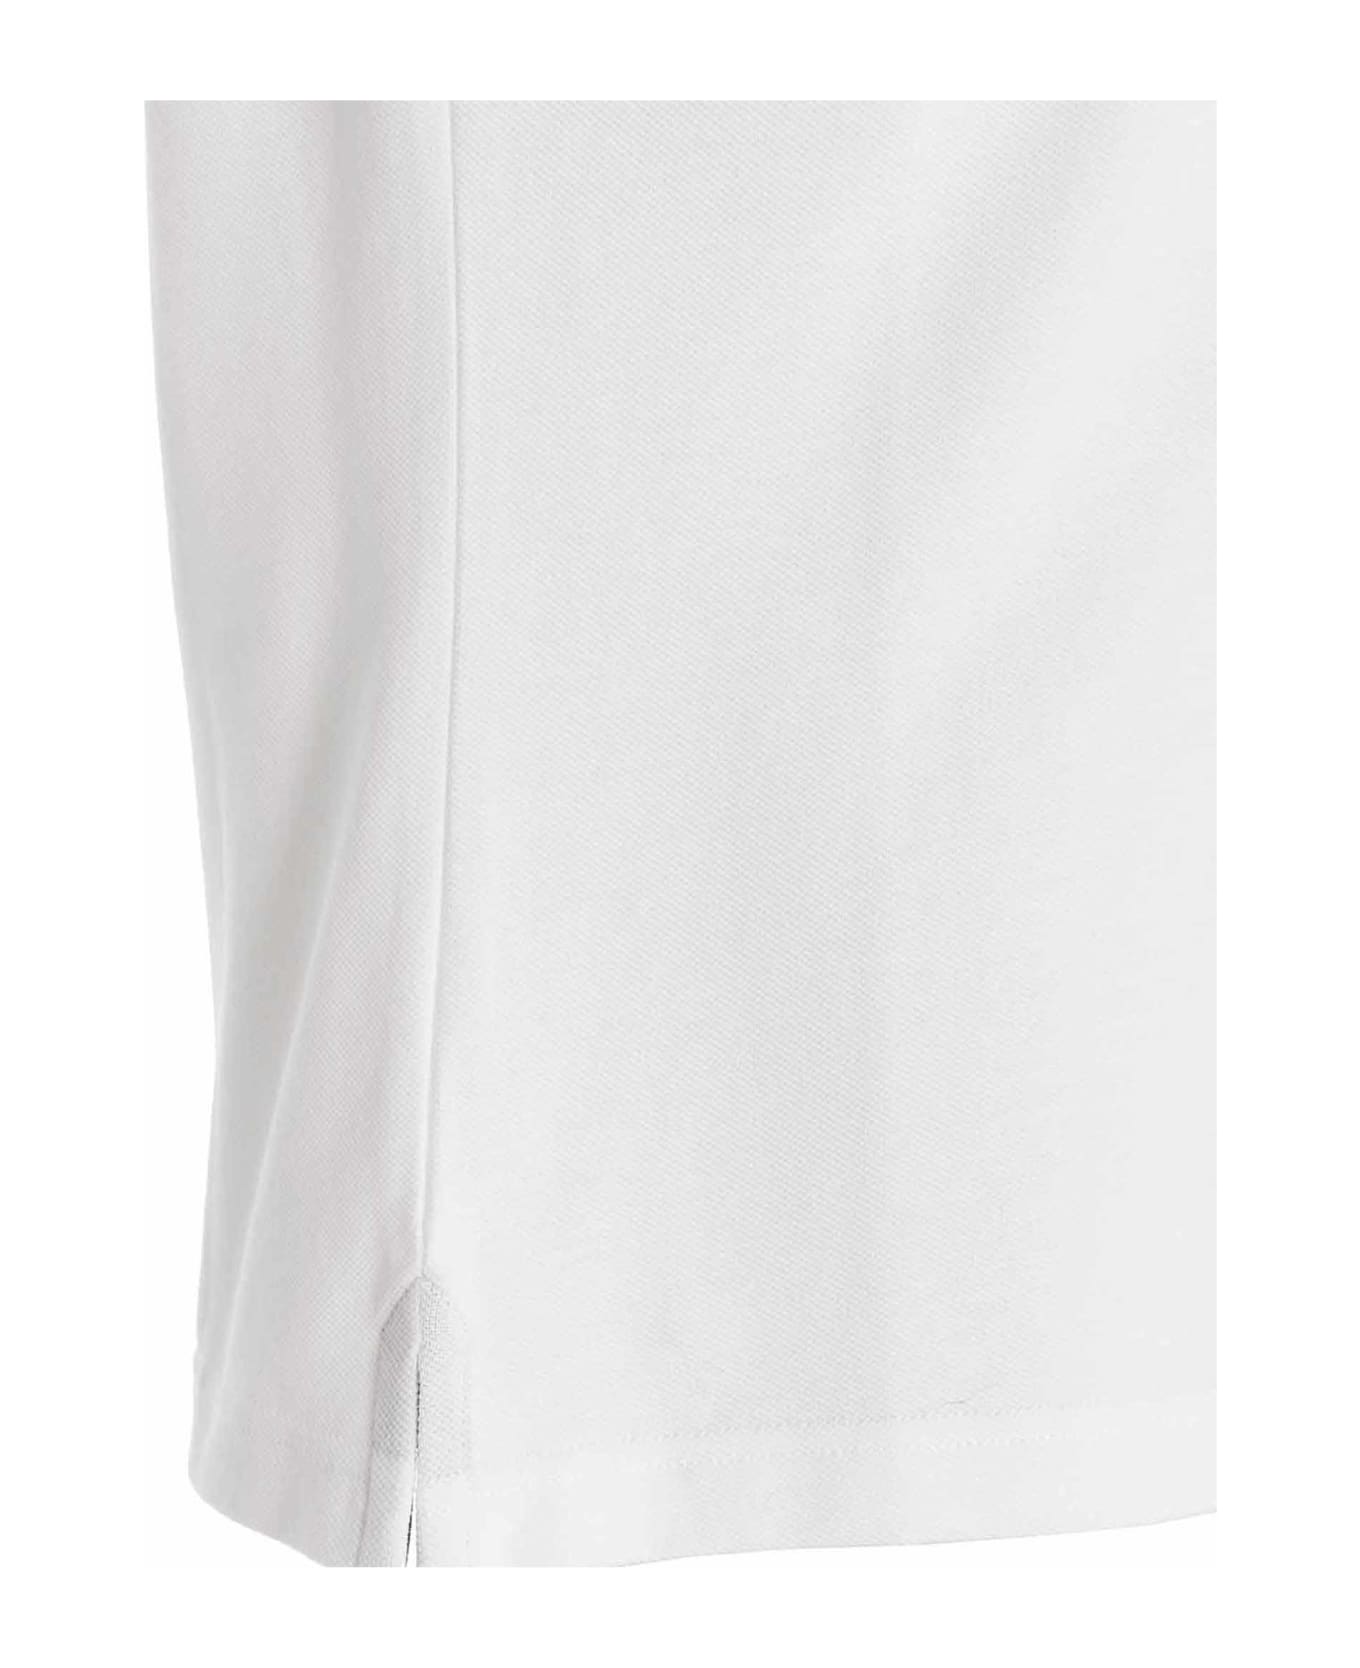 Barbour 'tartan' Polo Shirt - White Dress